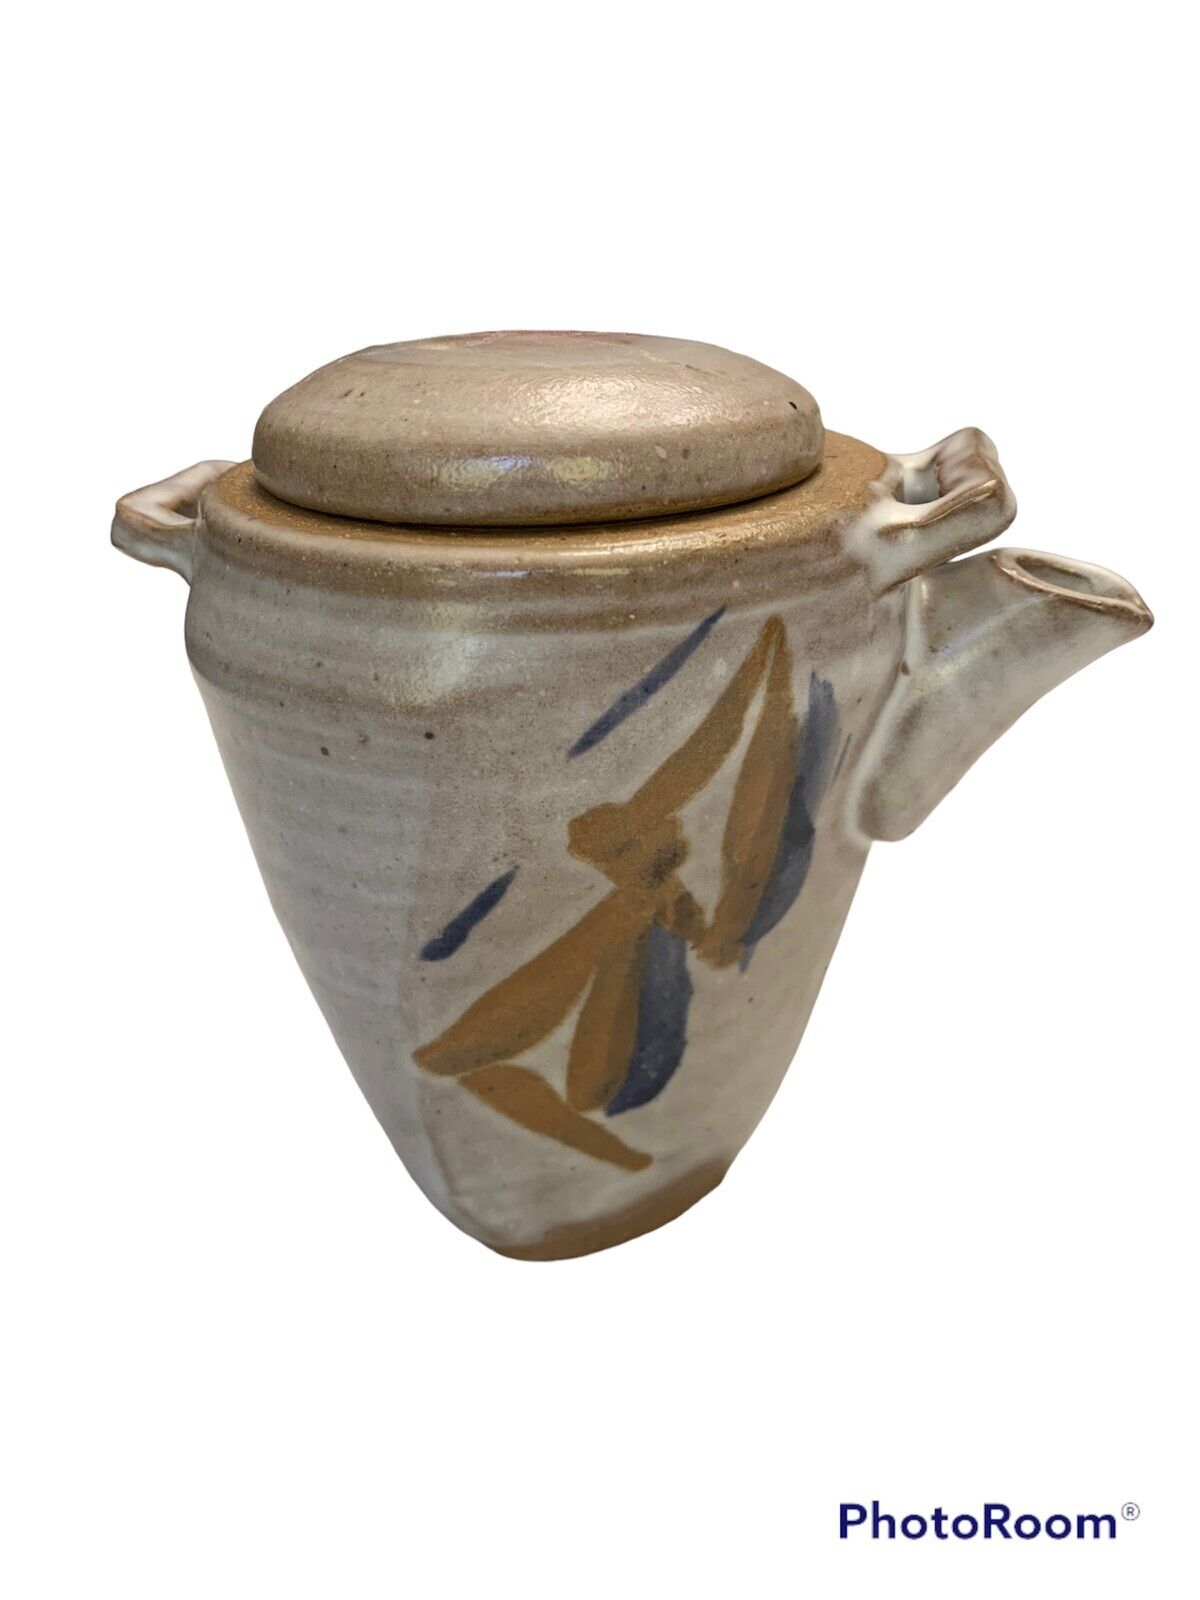 ARTIST Signed Asian Inspired Ceramic Tea Pot